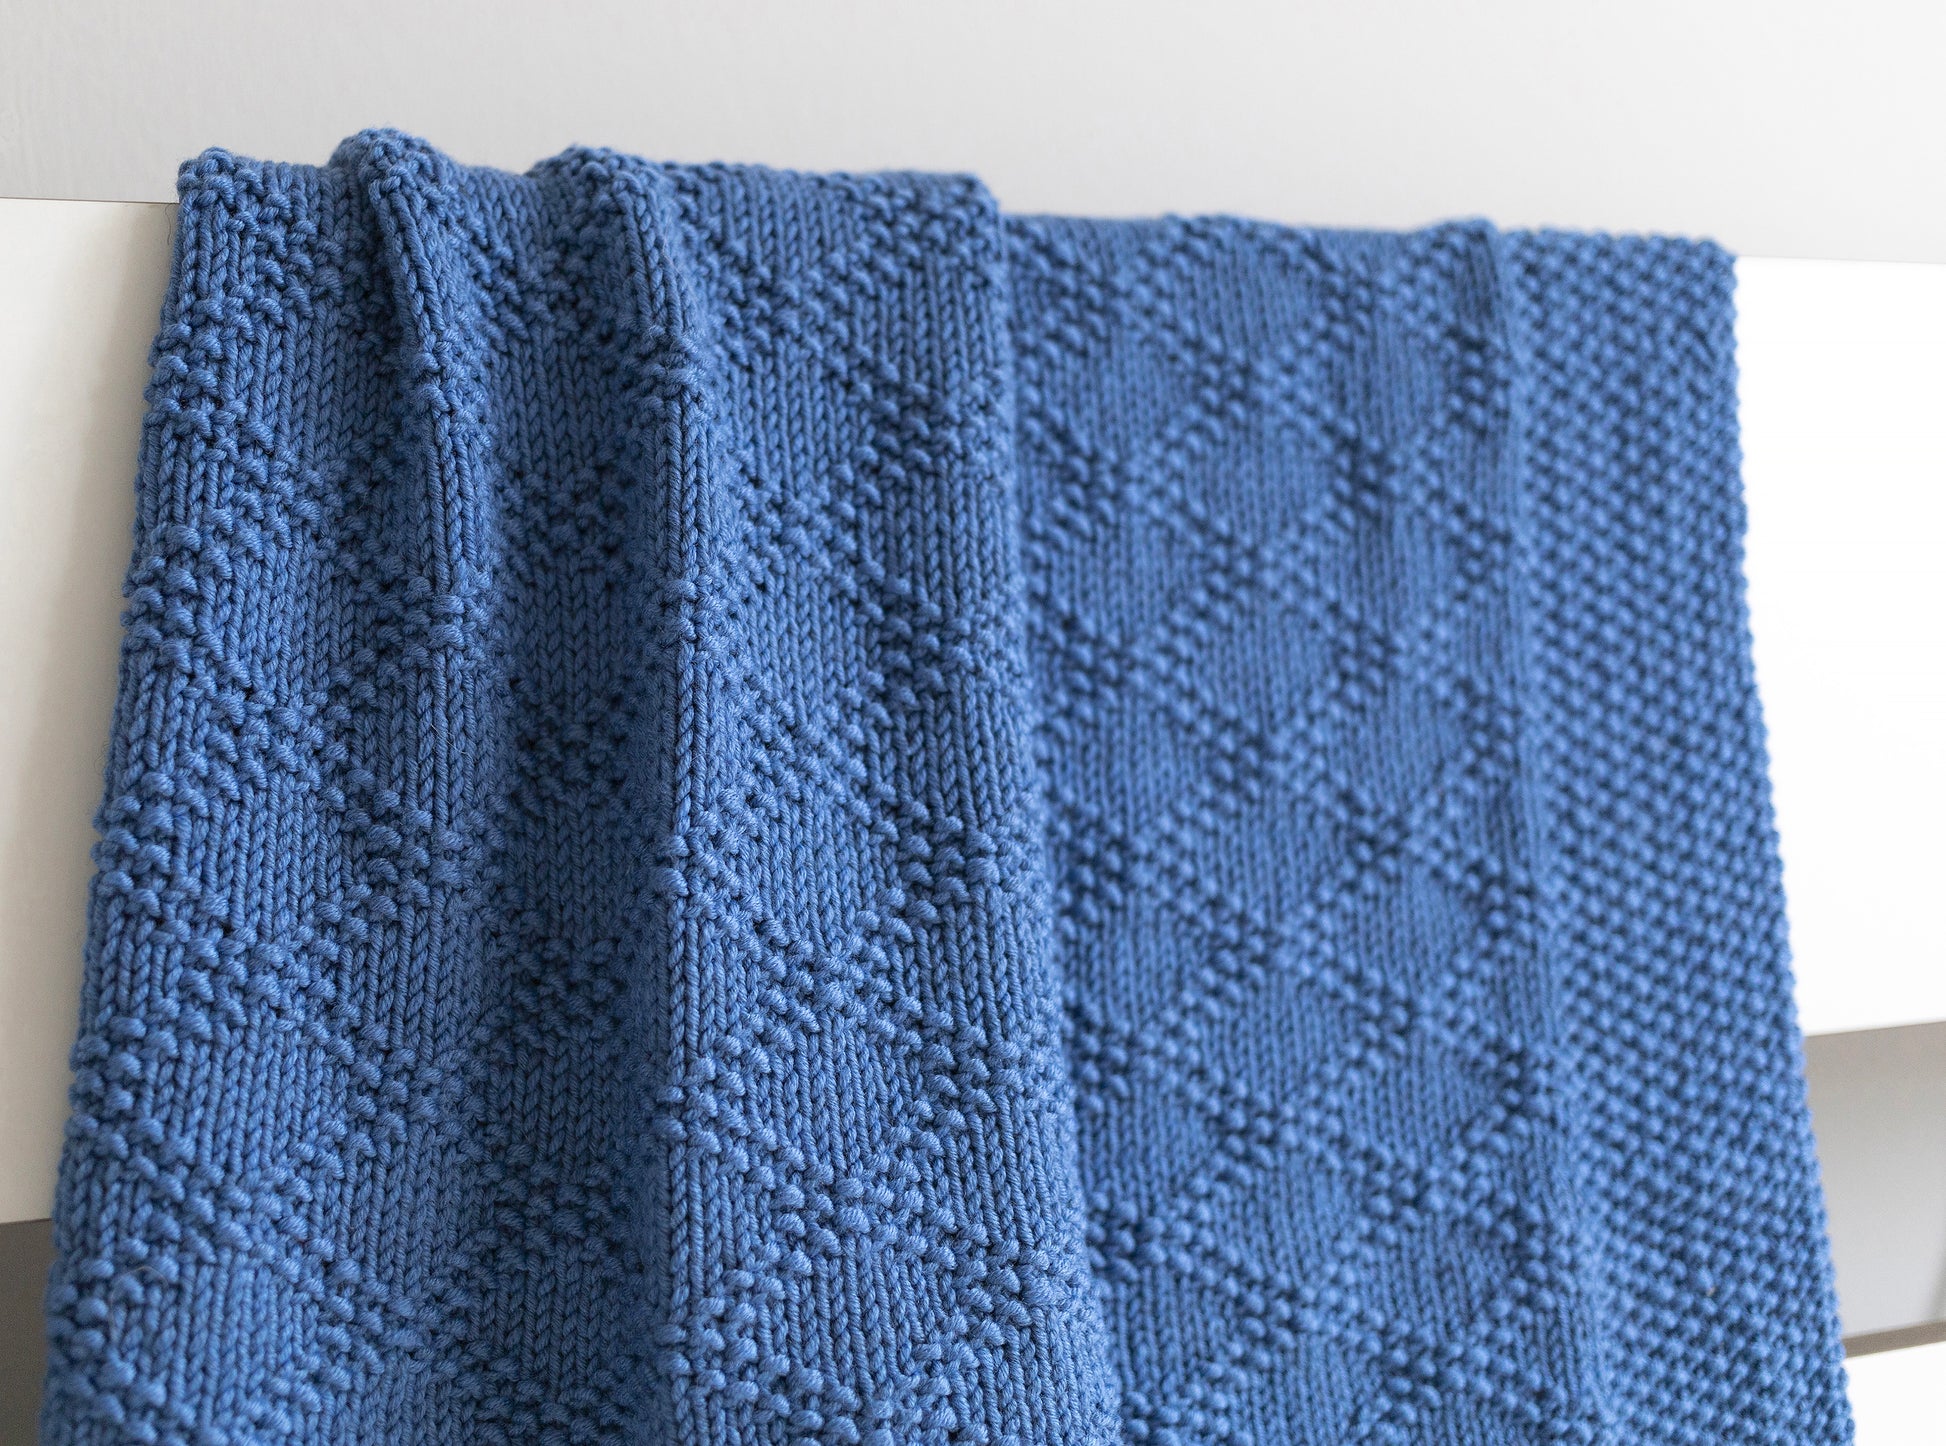 details of Blue merino wool hand-knitted blanket in Charles Brocade pattern